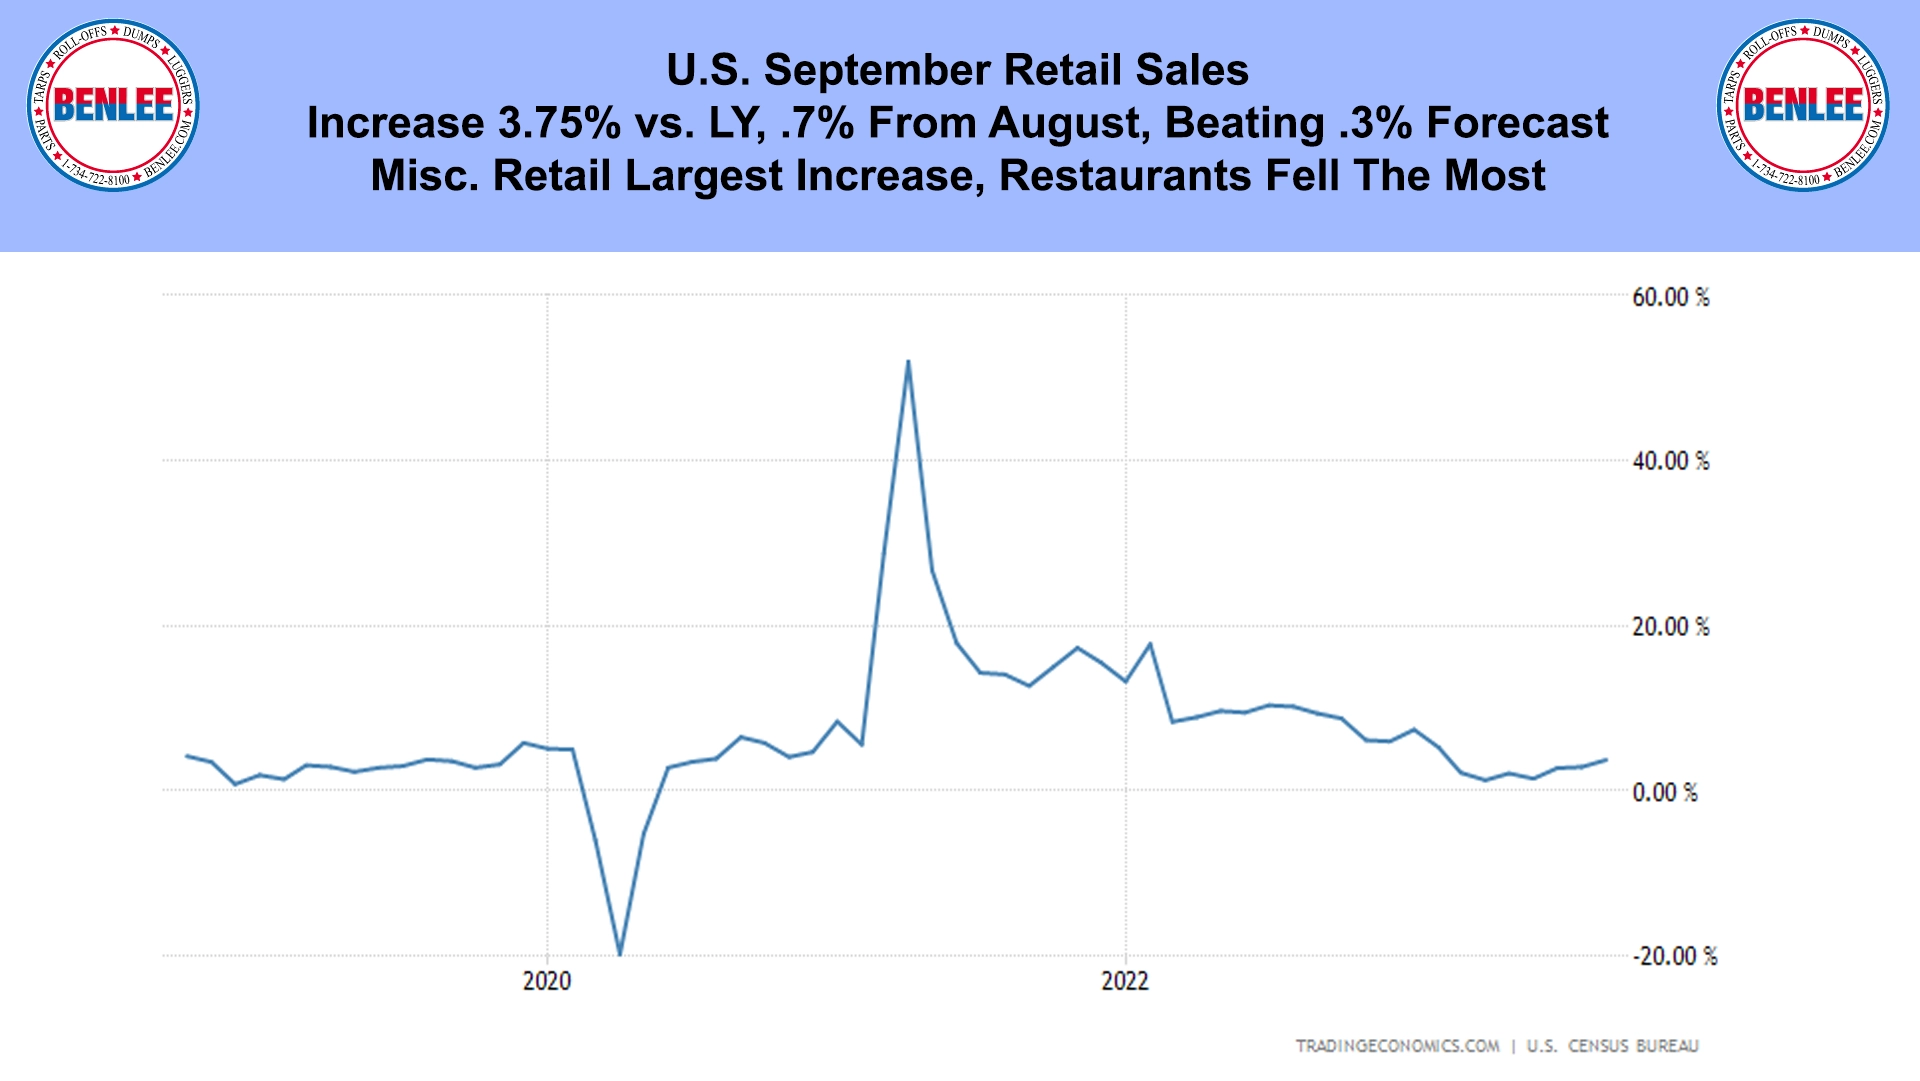 U.S. September Retail Sales